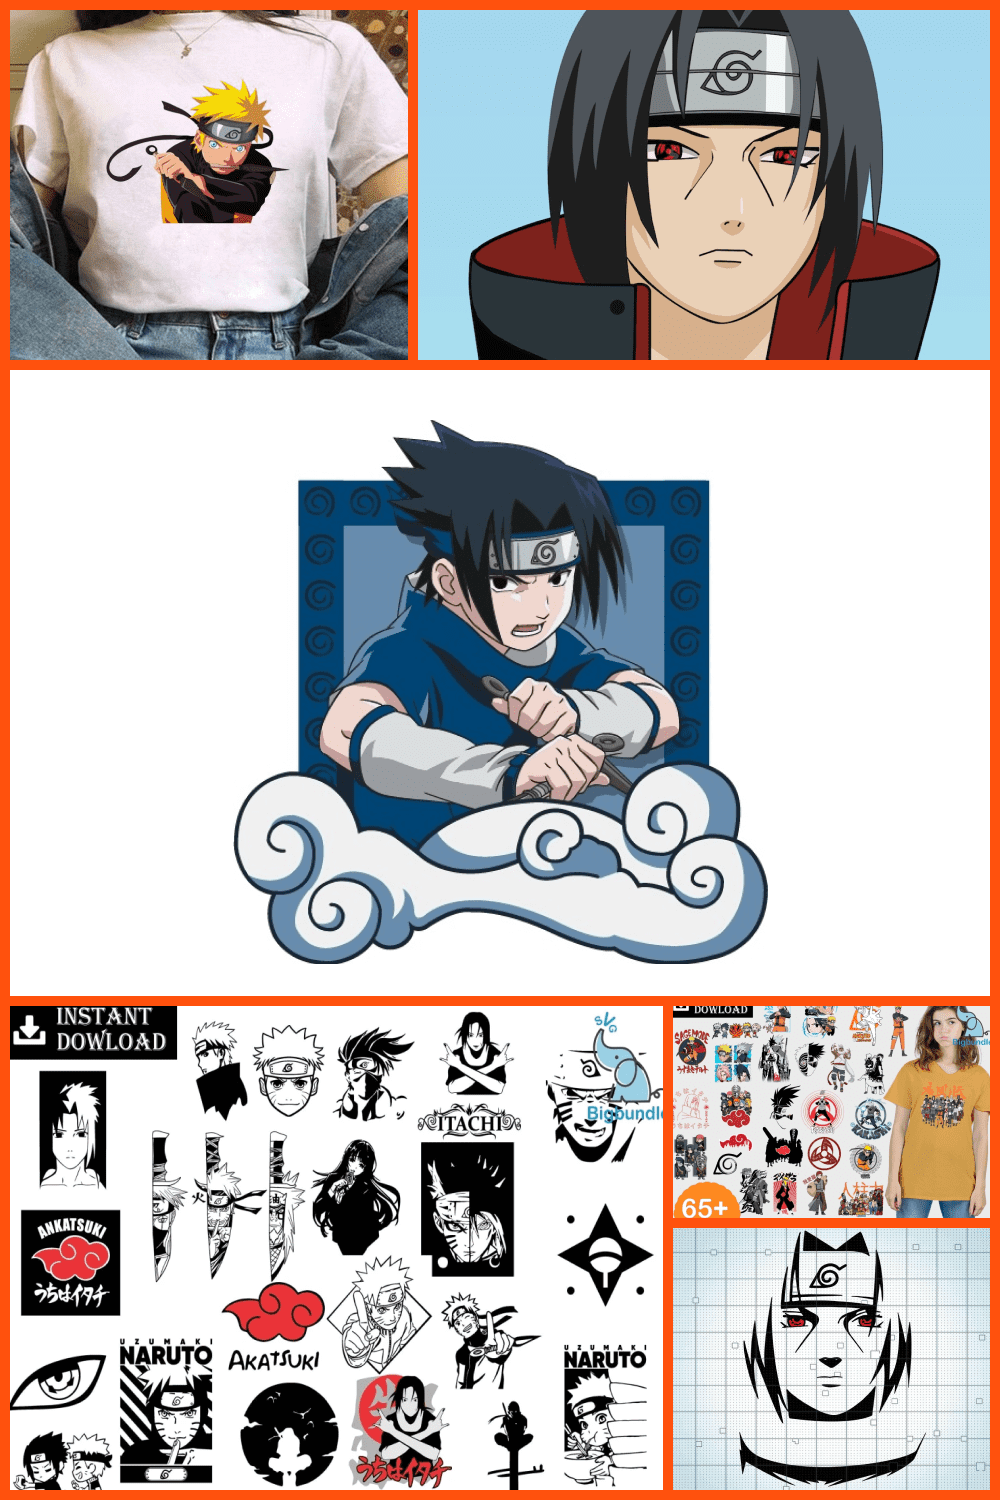 Best Naruto SVG Images pinterest.